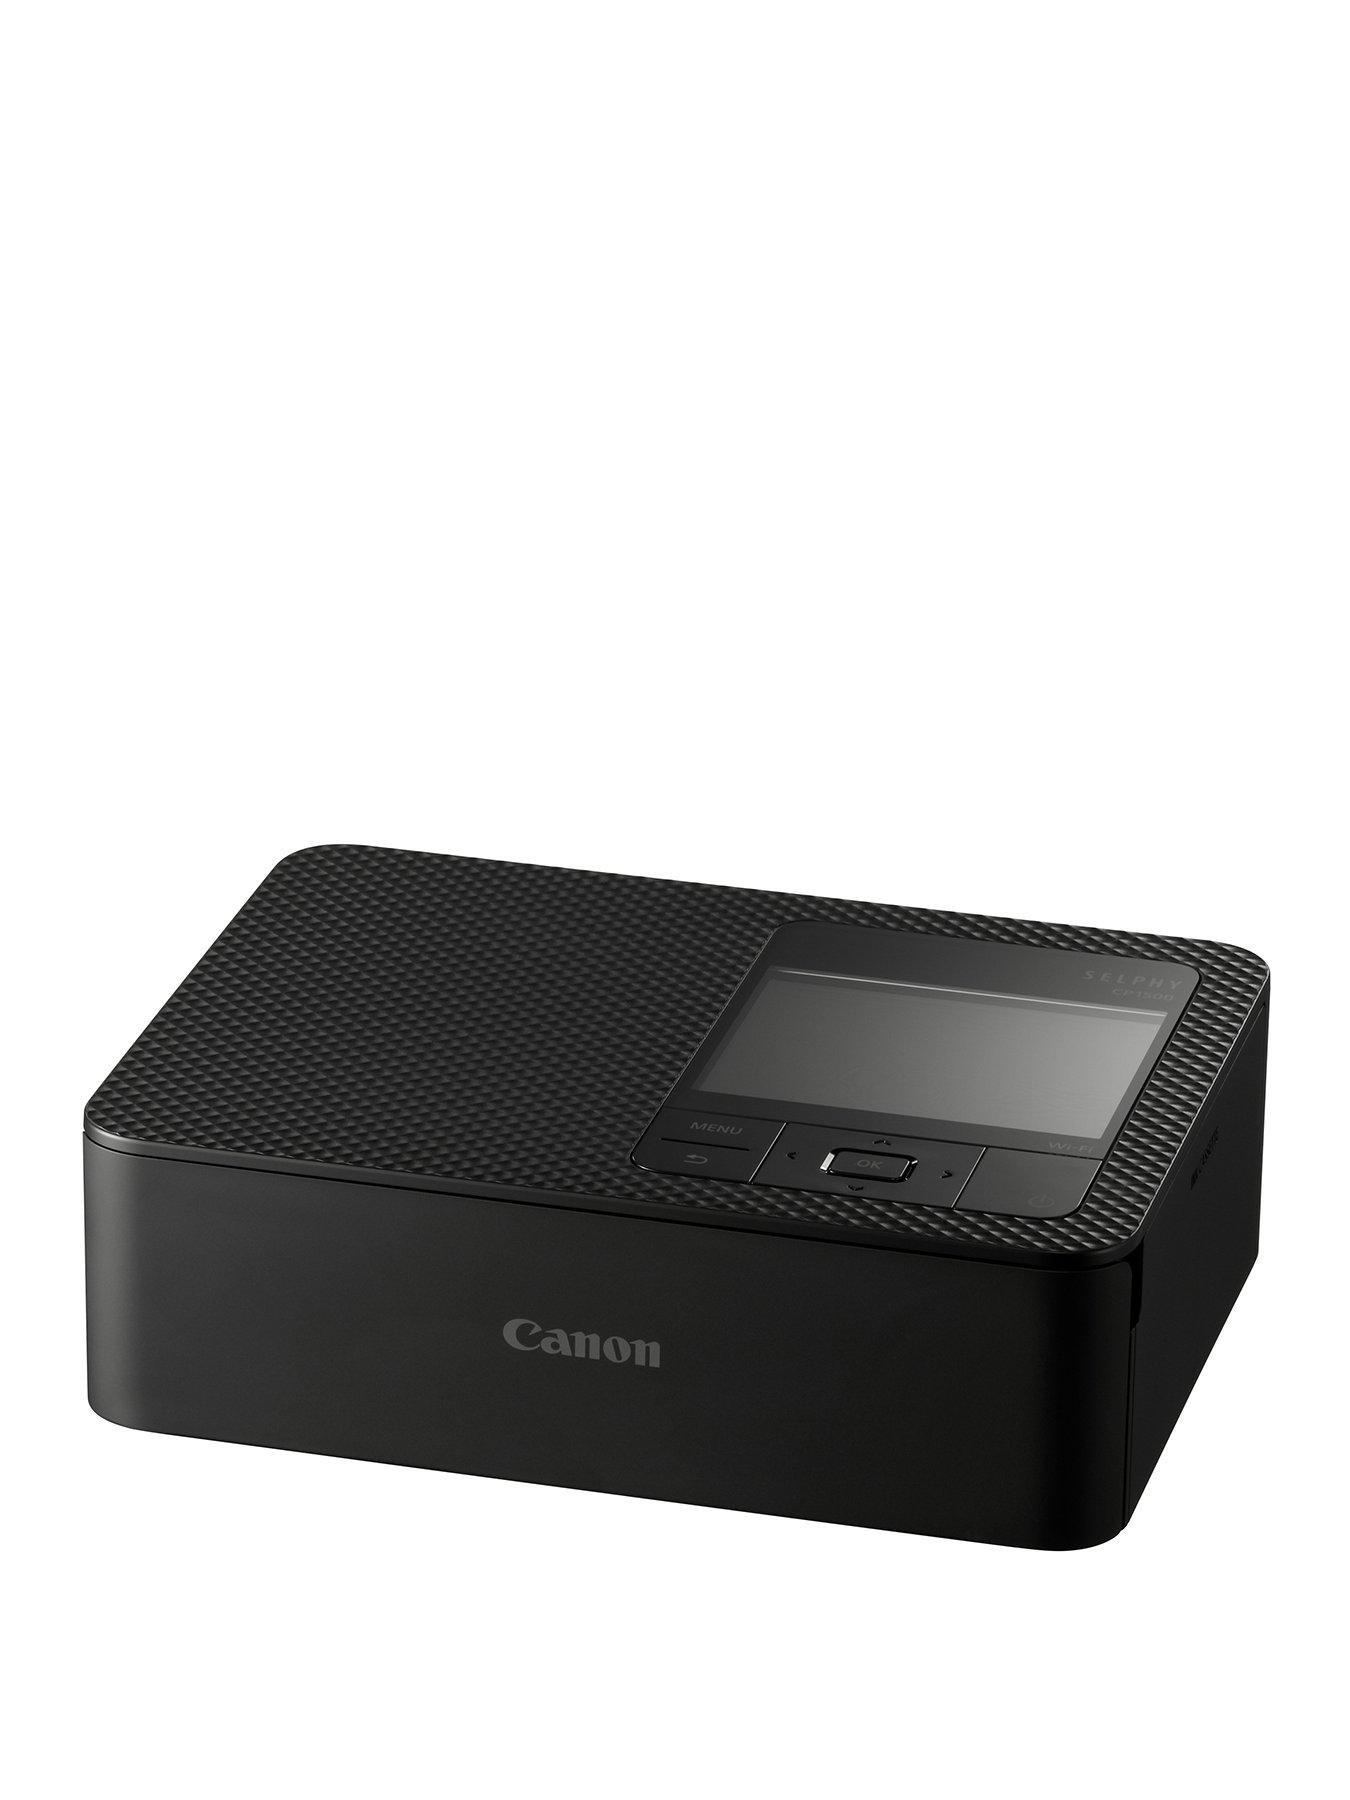 Canon Selphy Cp1500 Compact Wifi Photo Printer - Black